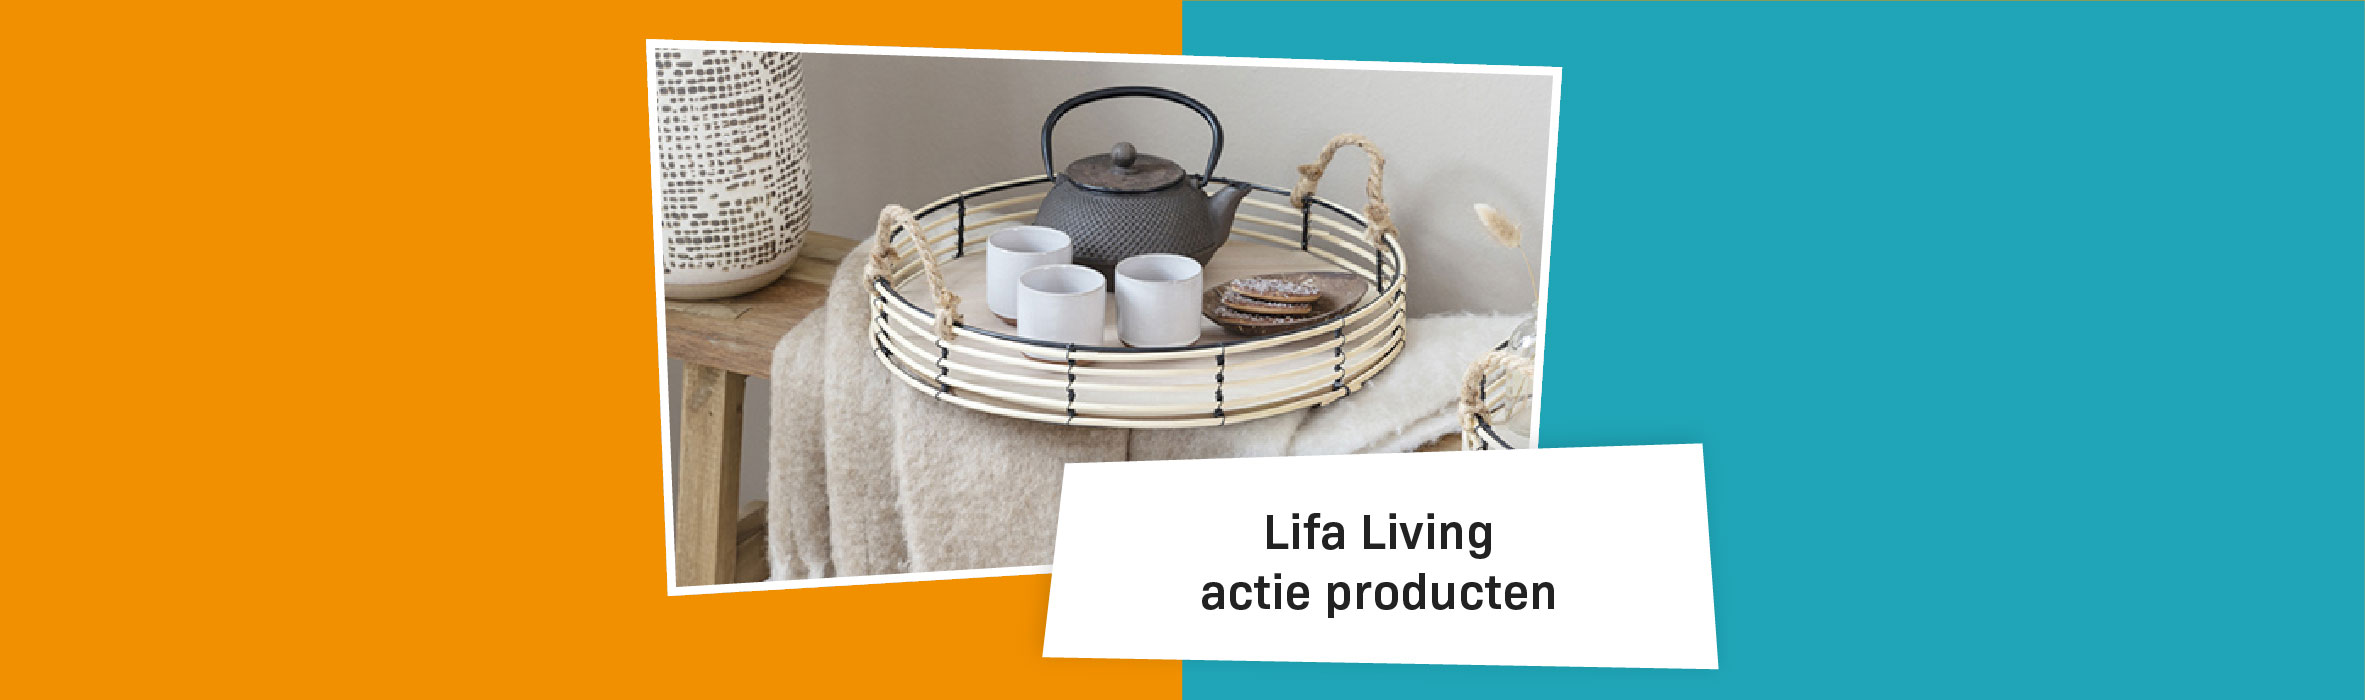 Lifa Living-Werbeprodukte